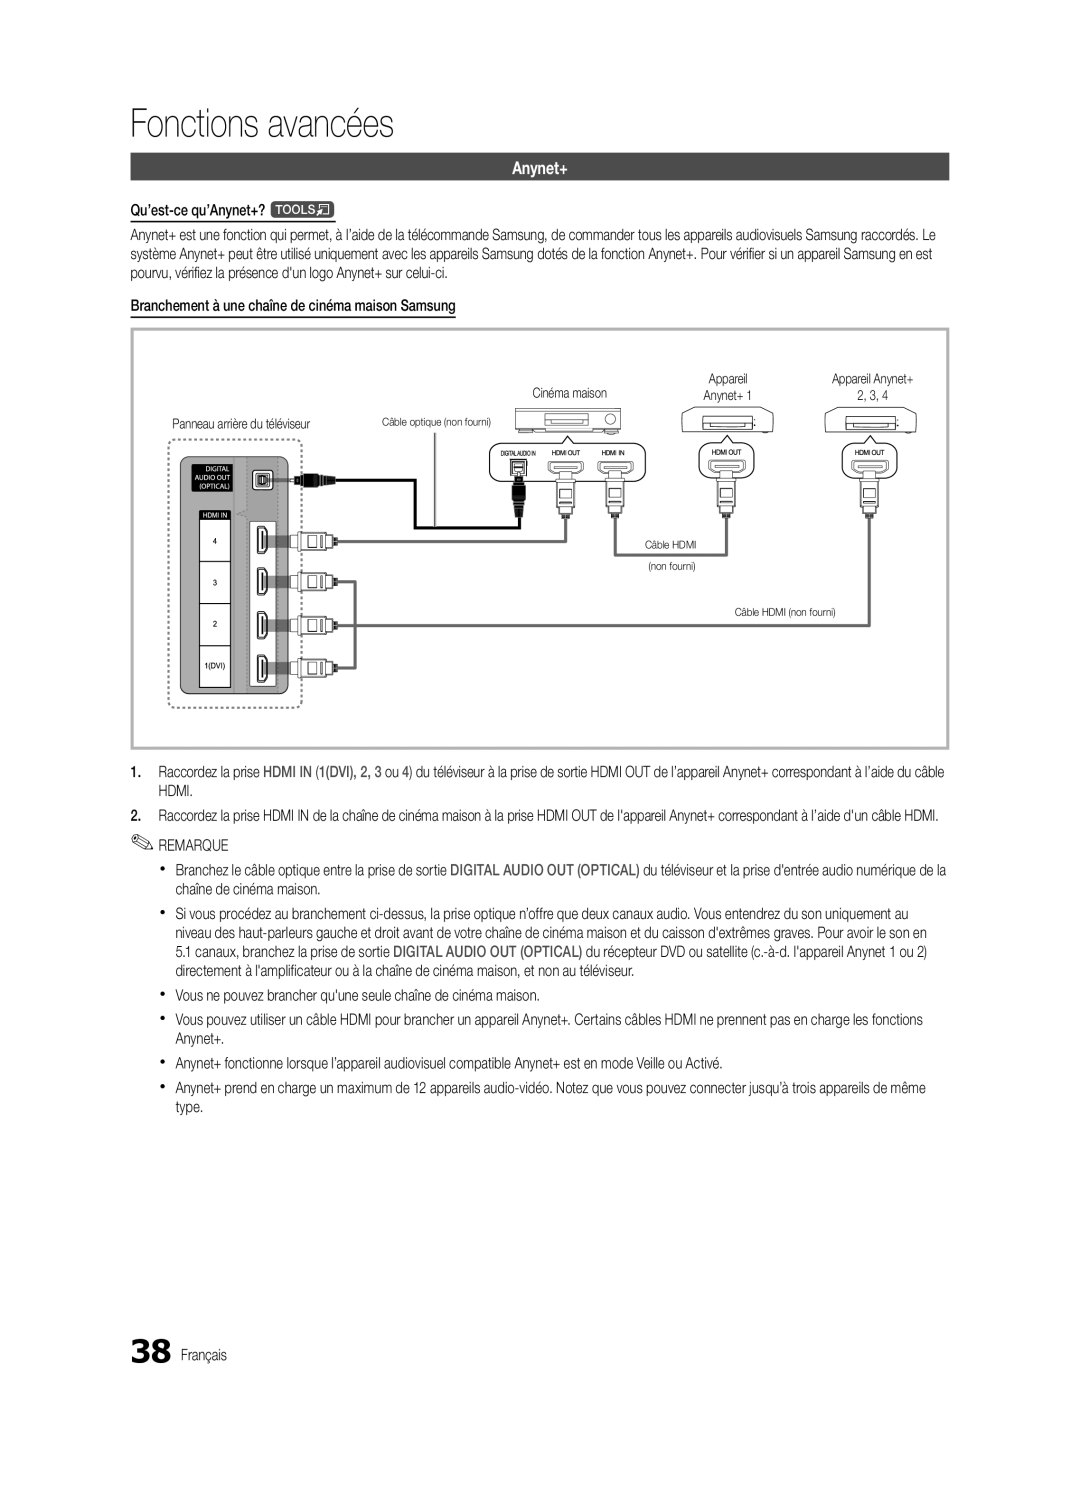 Samsung BN68-03165B-01 Fonctions avancées, Appareil Anynet+, Câble optique non fourni, Câble HDMI non fourni 